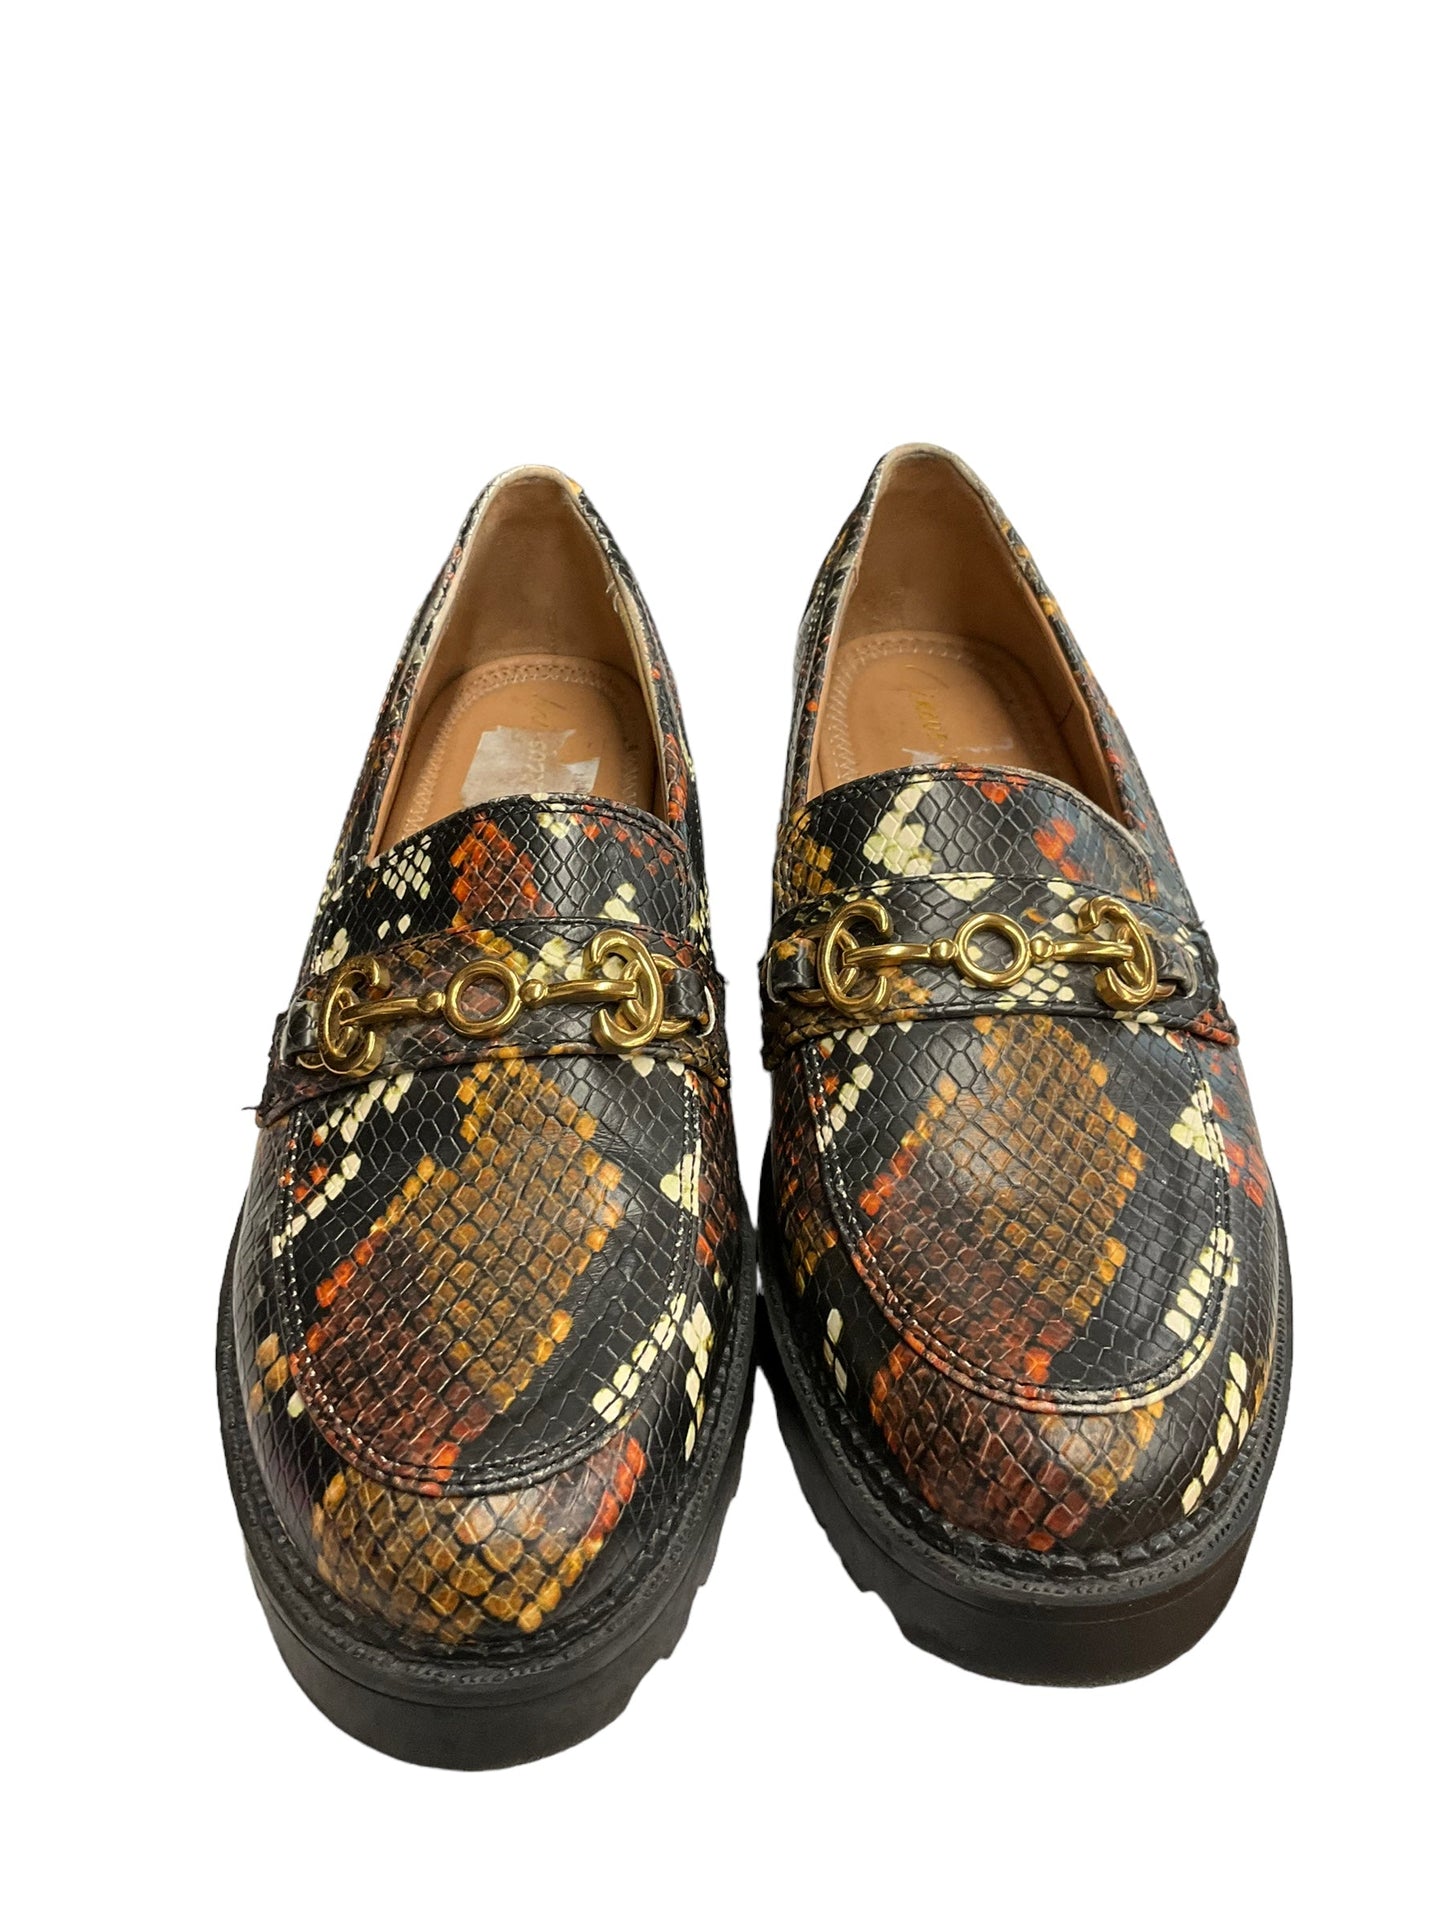 Snakeskin Print Shoes Heels Block Circus By Sam Edelman, Size 9.5